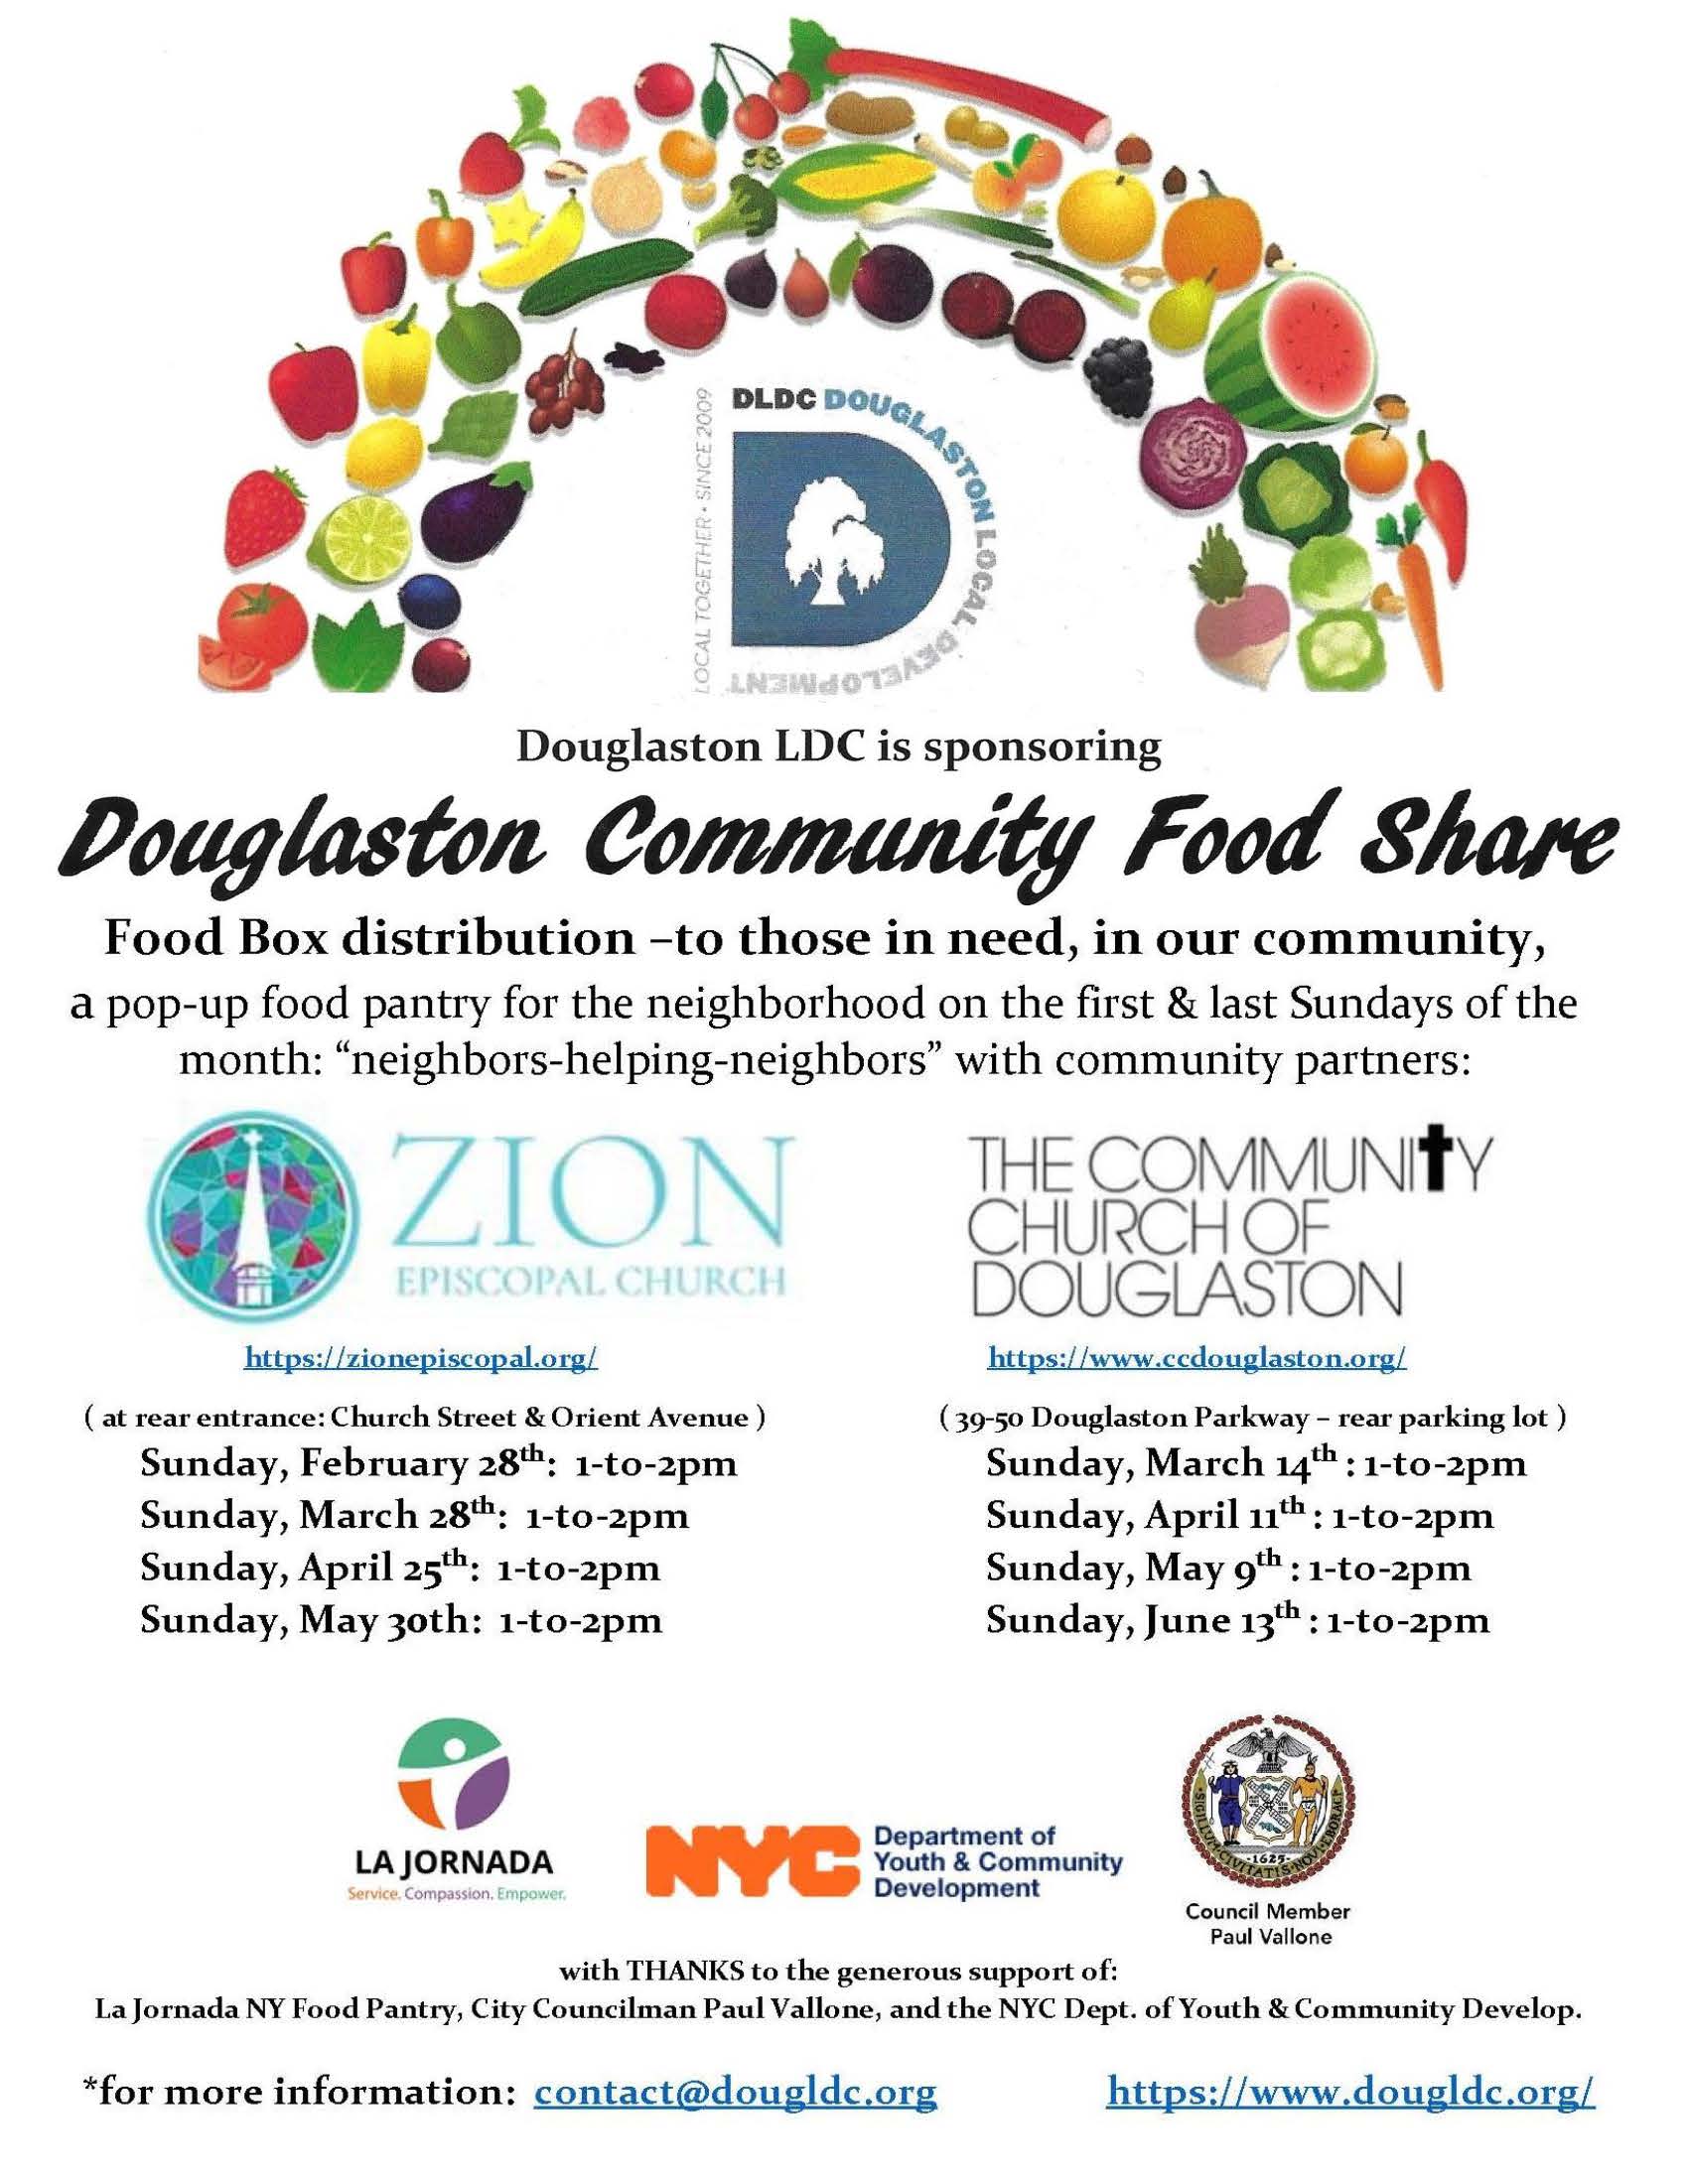 Douglaston Community Food Share @ The Community Church of Douglaston